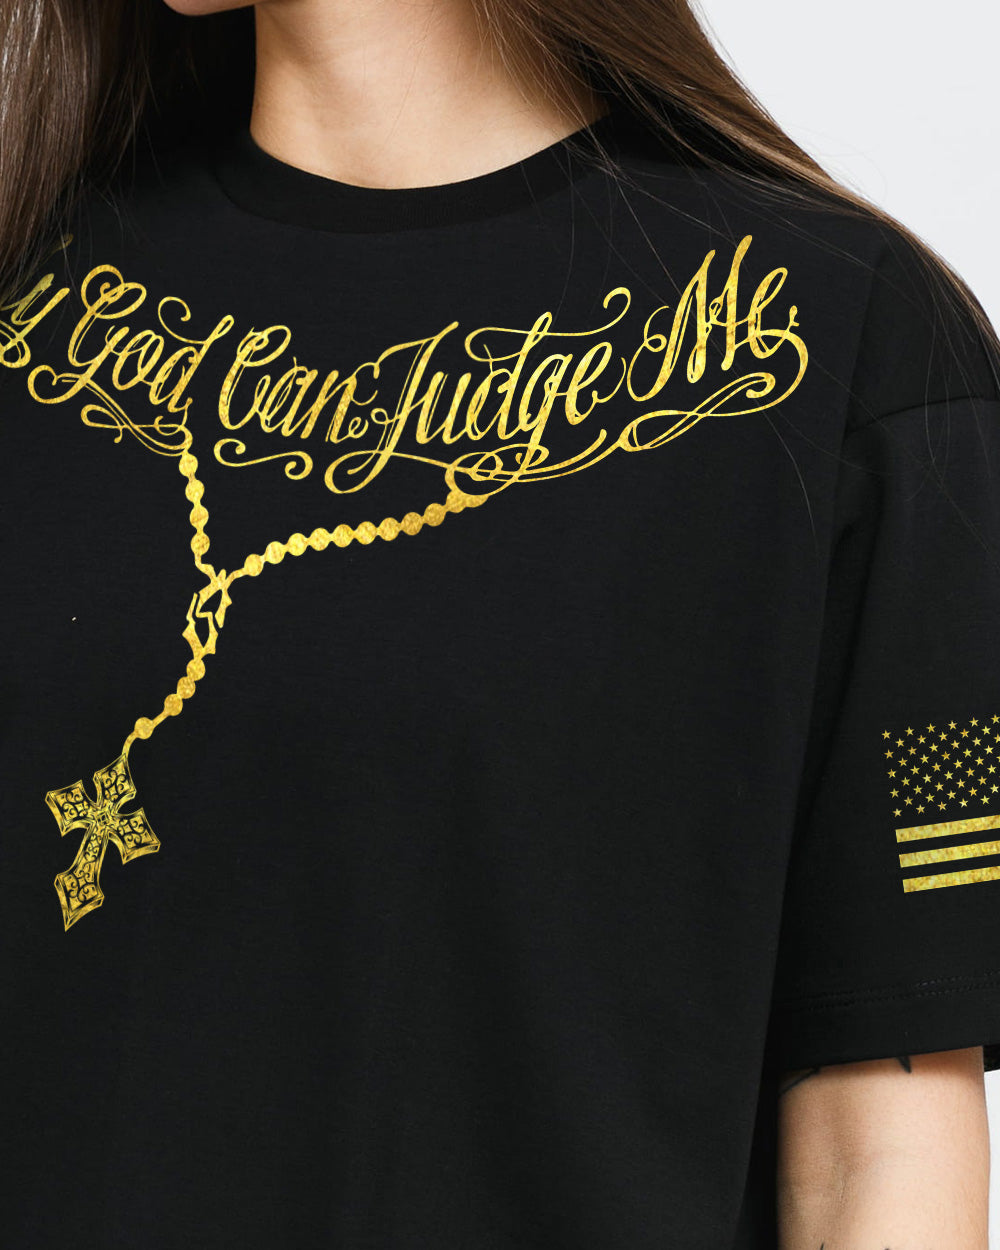 Only God Can Judge Me One Nation Under God Cross Flag Women's Christian Tshirt